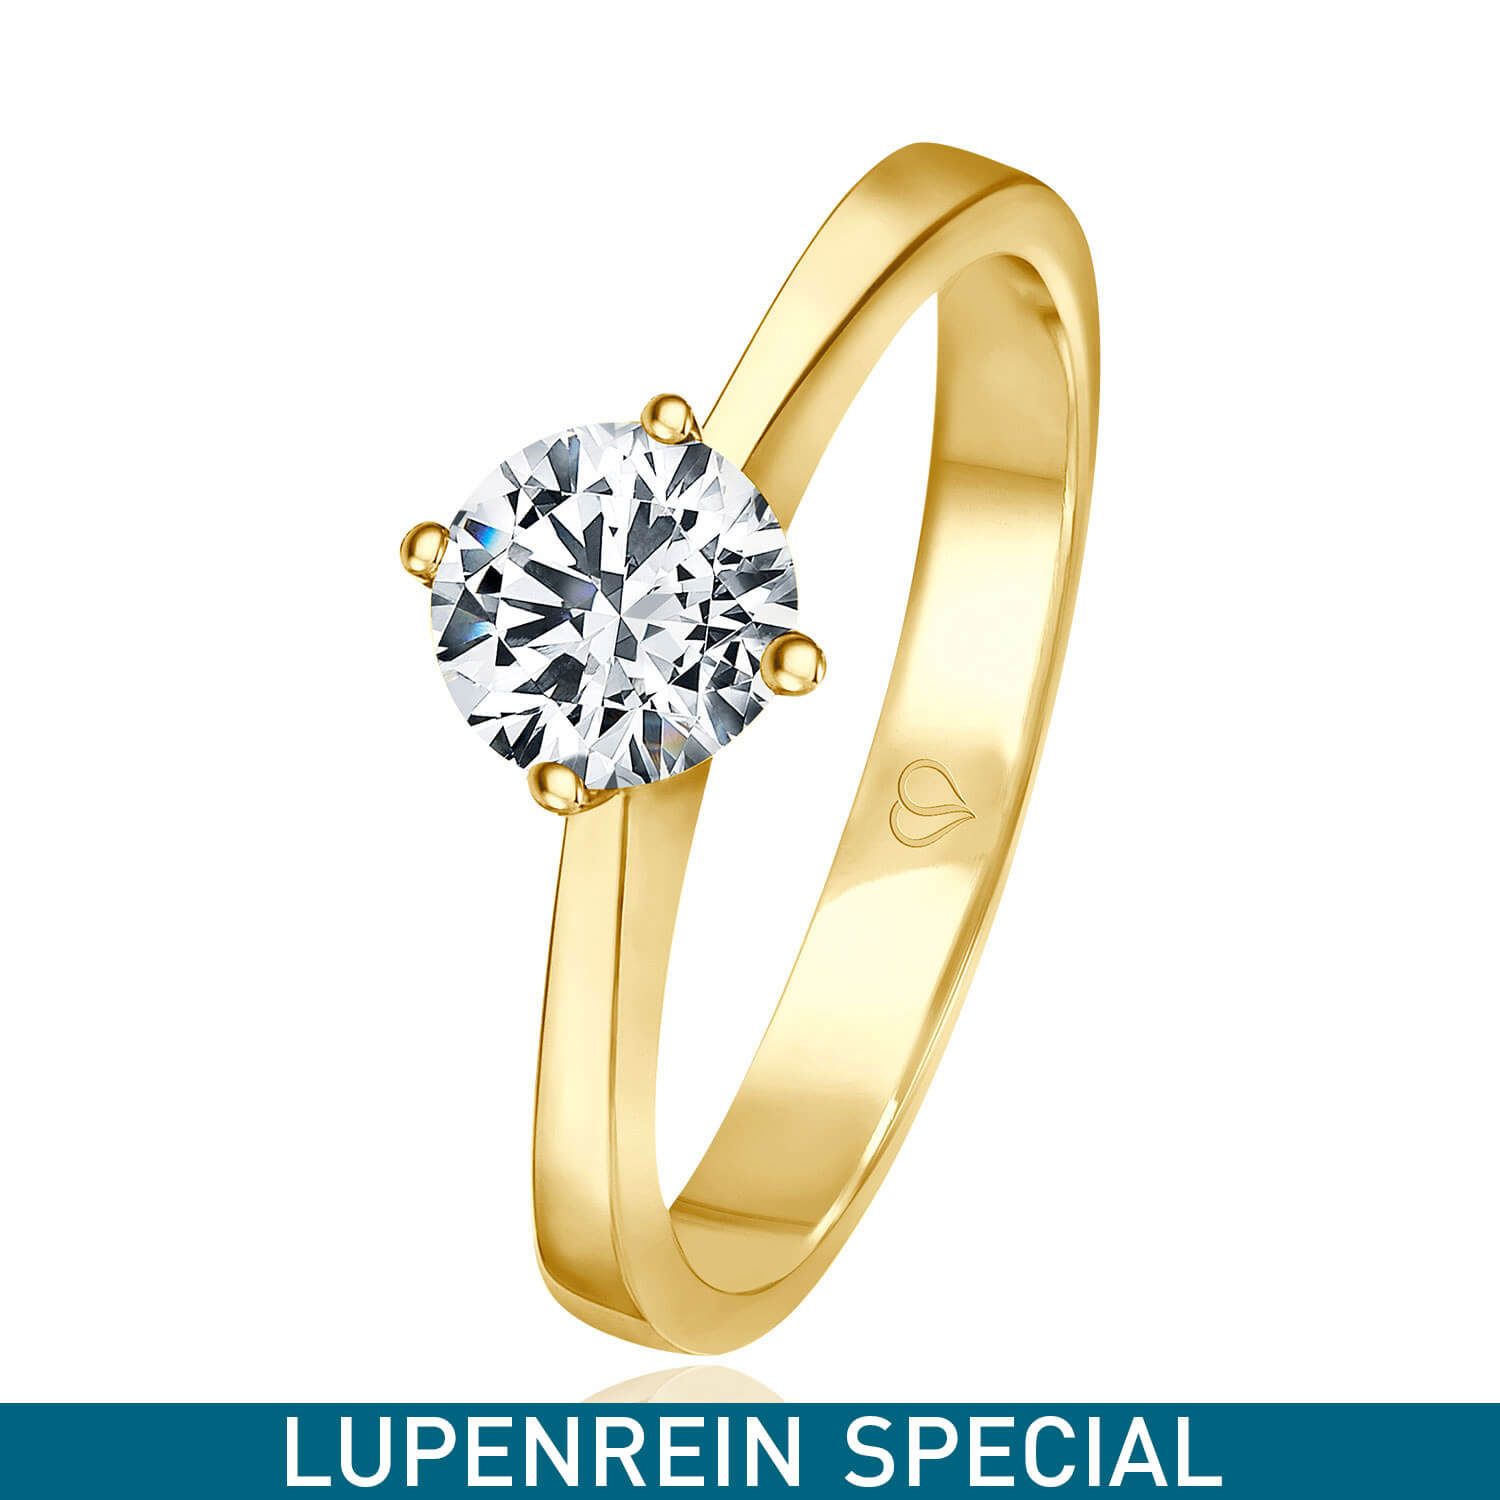 2,10Kt Ovale Form 585er Weiß gold gut aussehend Solitär Verlobung Ring 